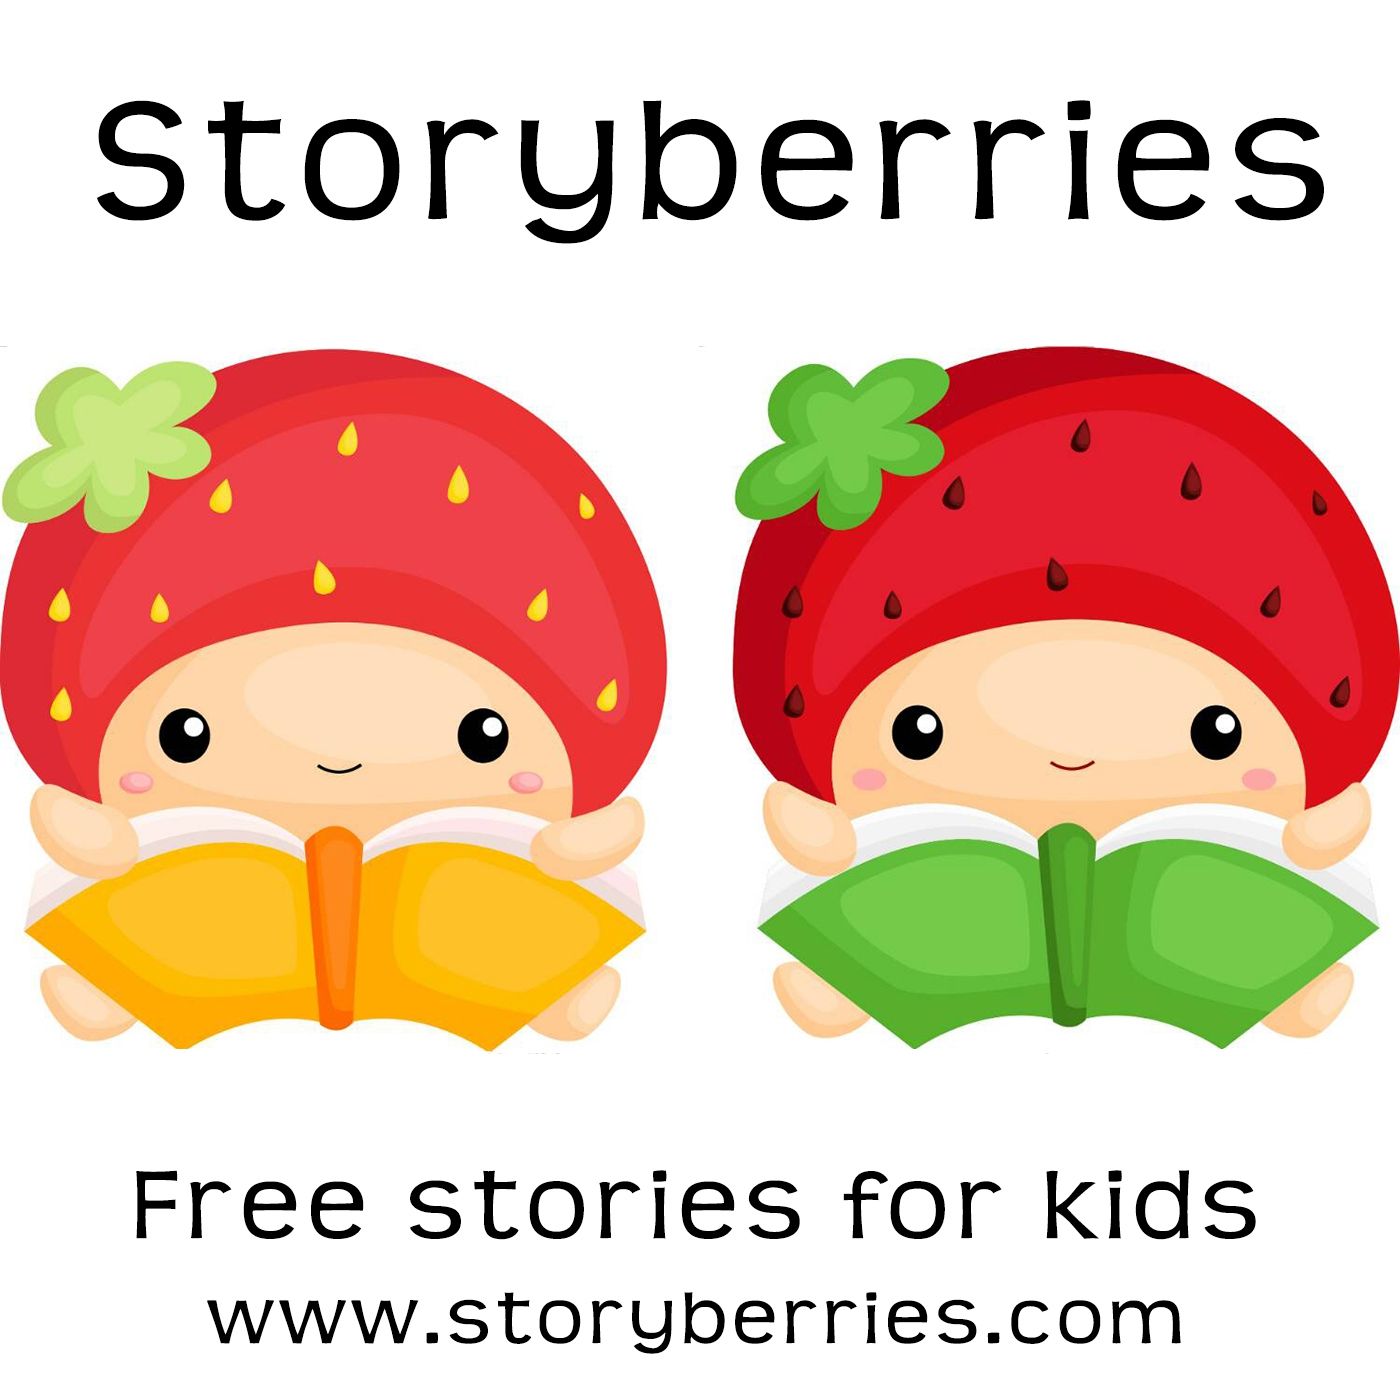 Storyberries.com